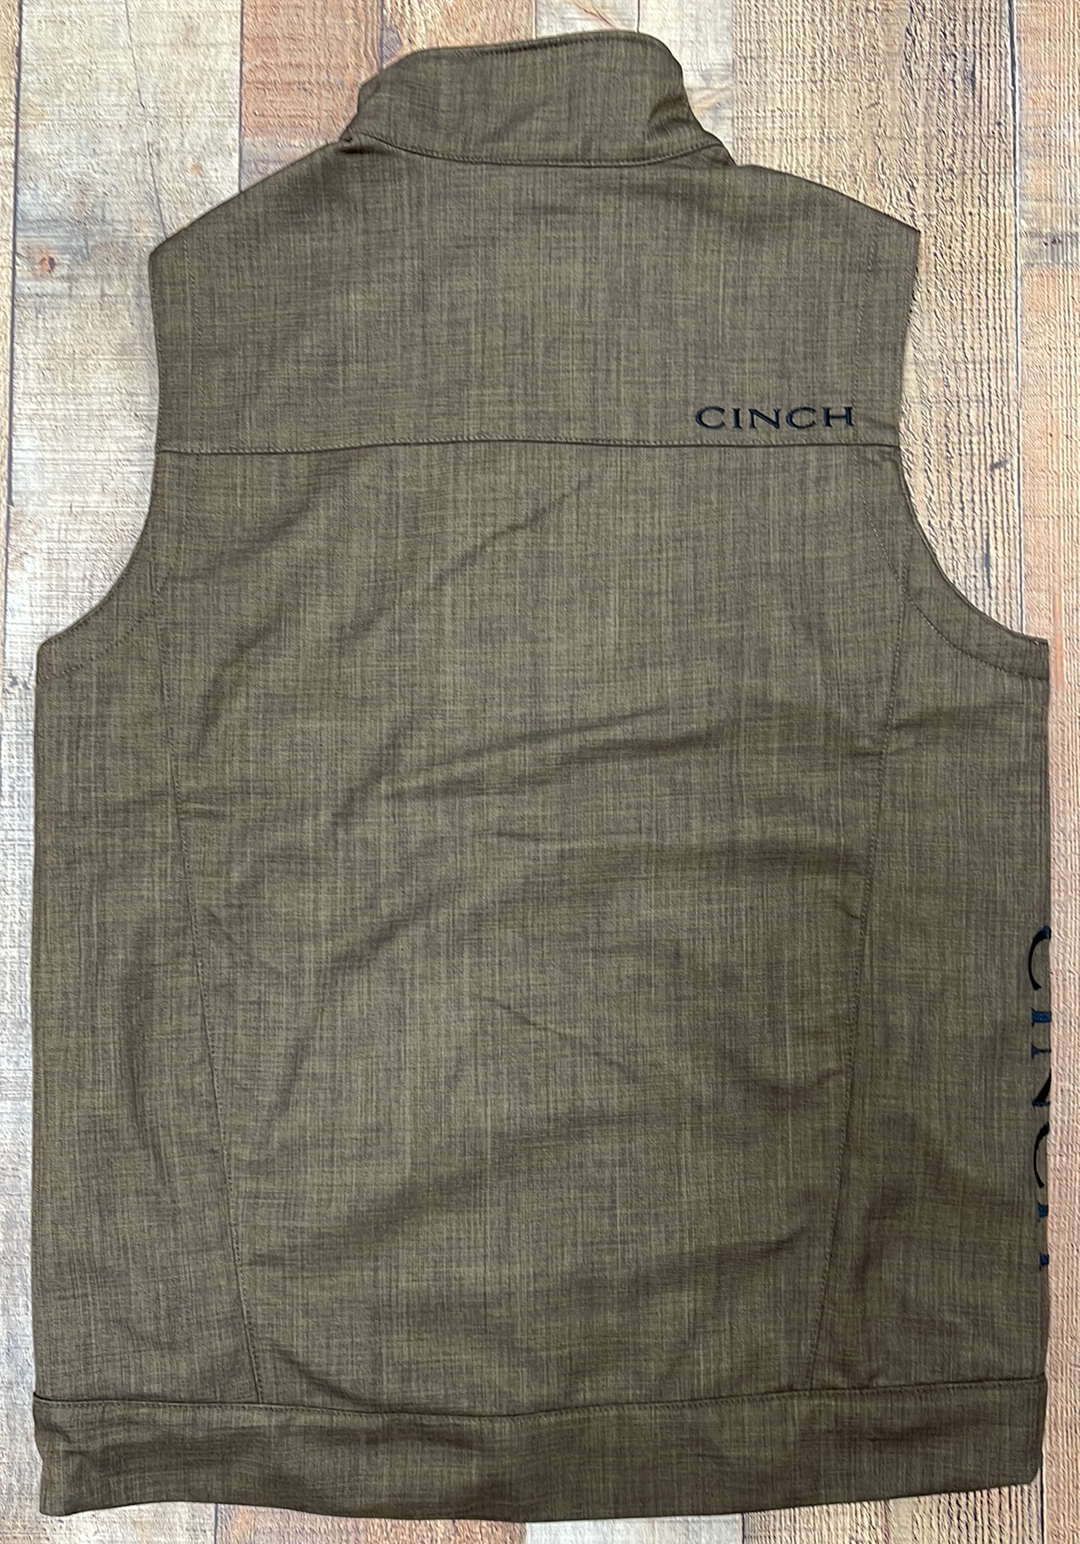 Cinch Concealed Carry Vest - Brown